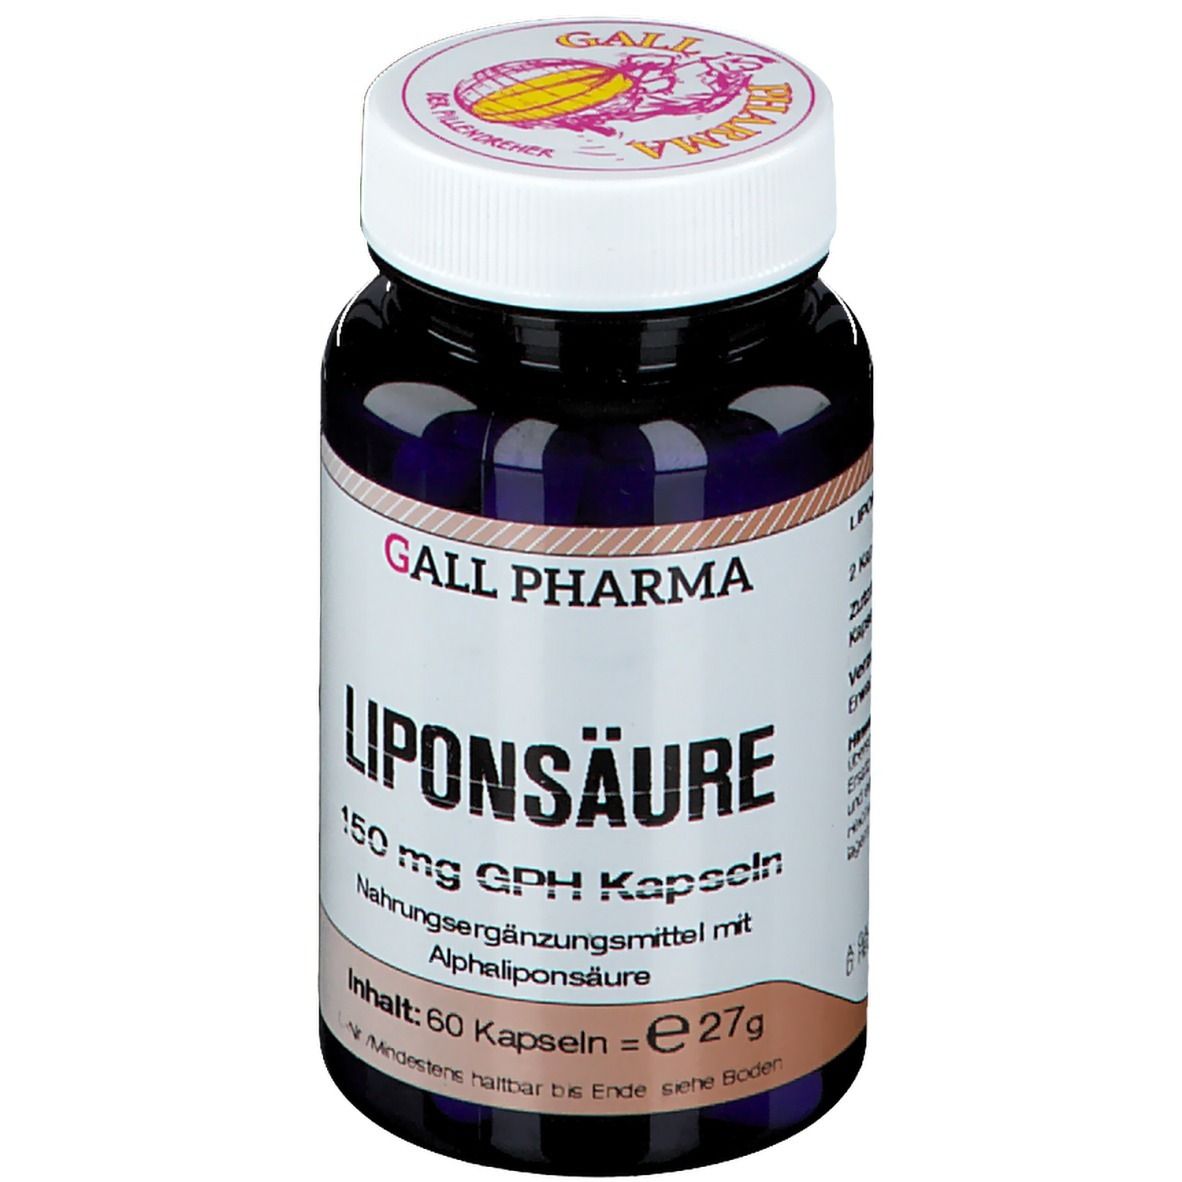 GALL PHARMA Liponsäure 150 mg